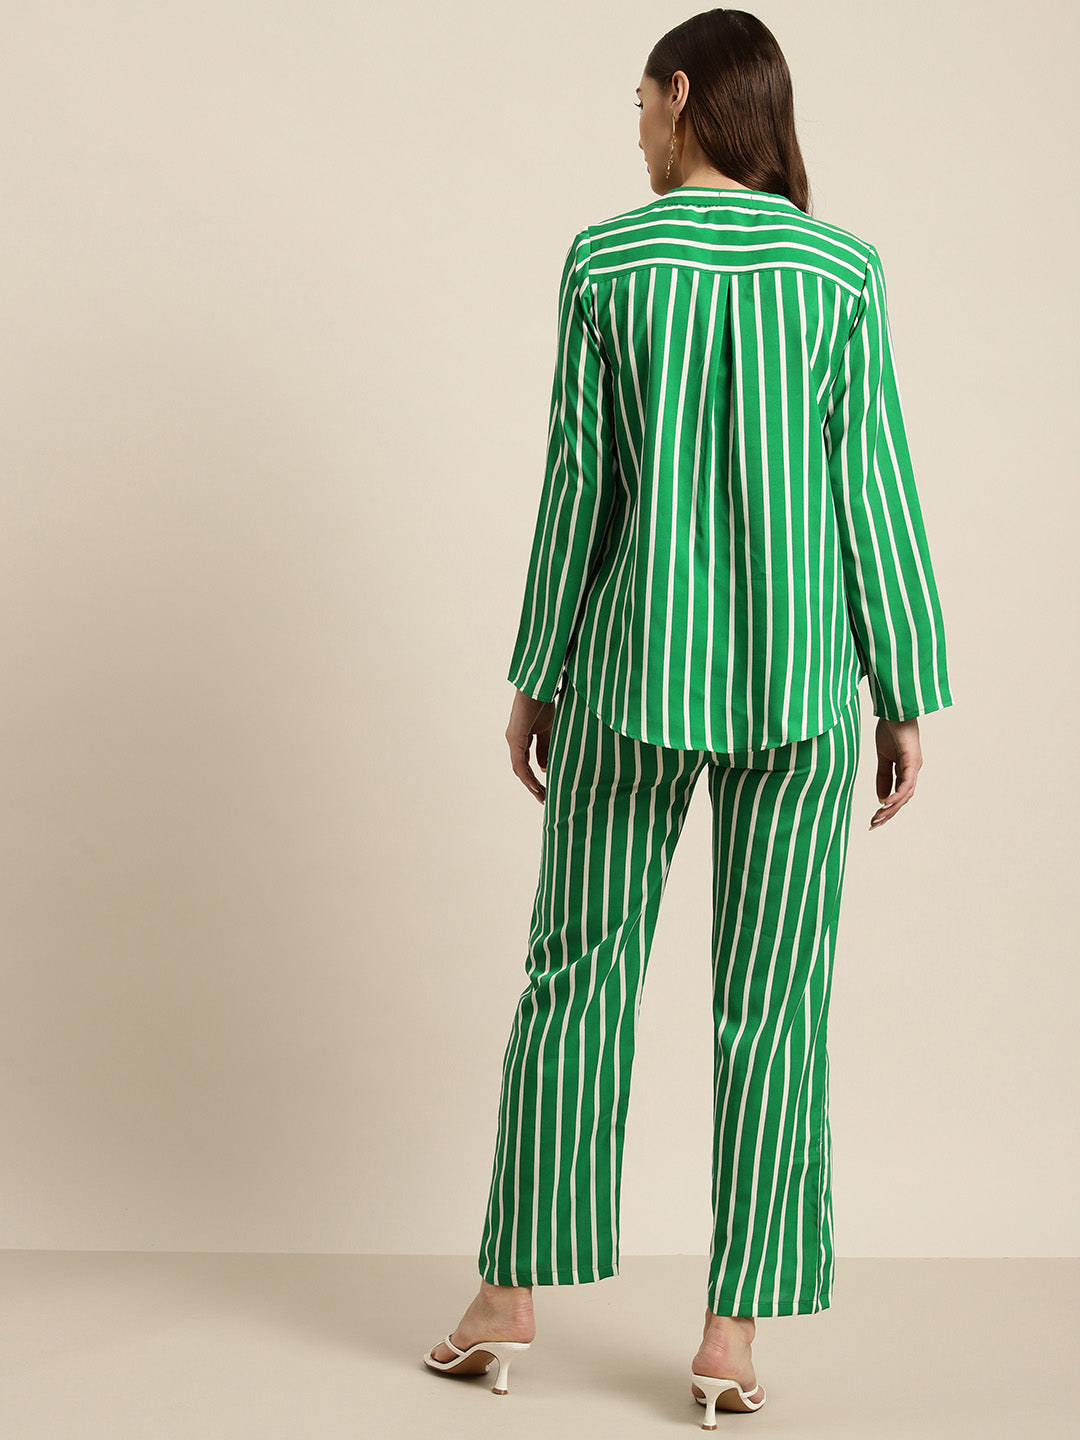 Green & white stripe crepe shirt and pant set.